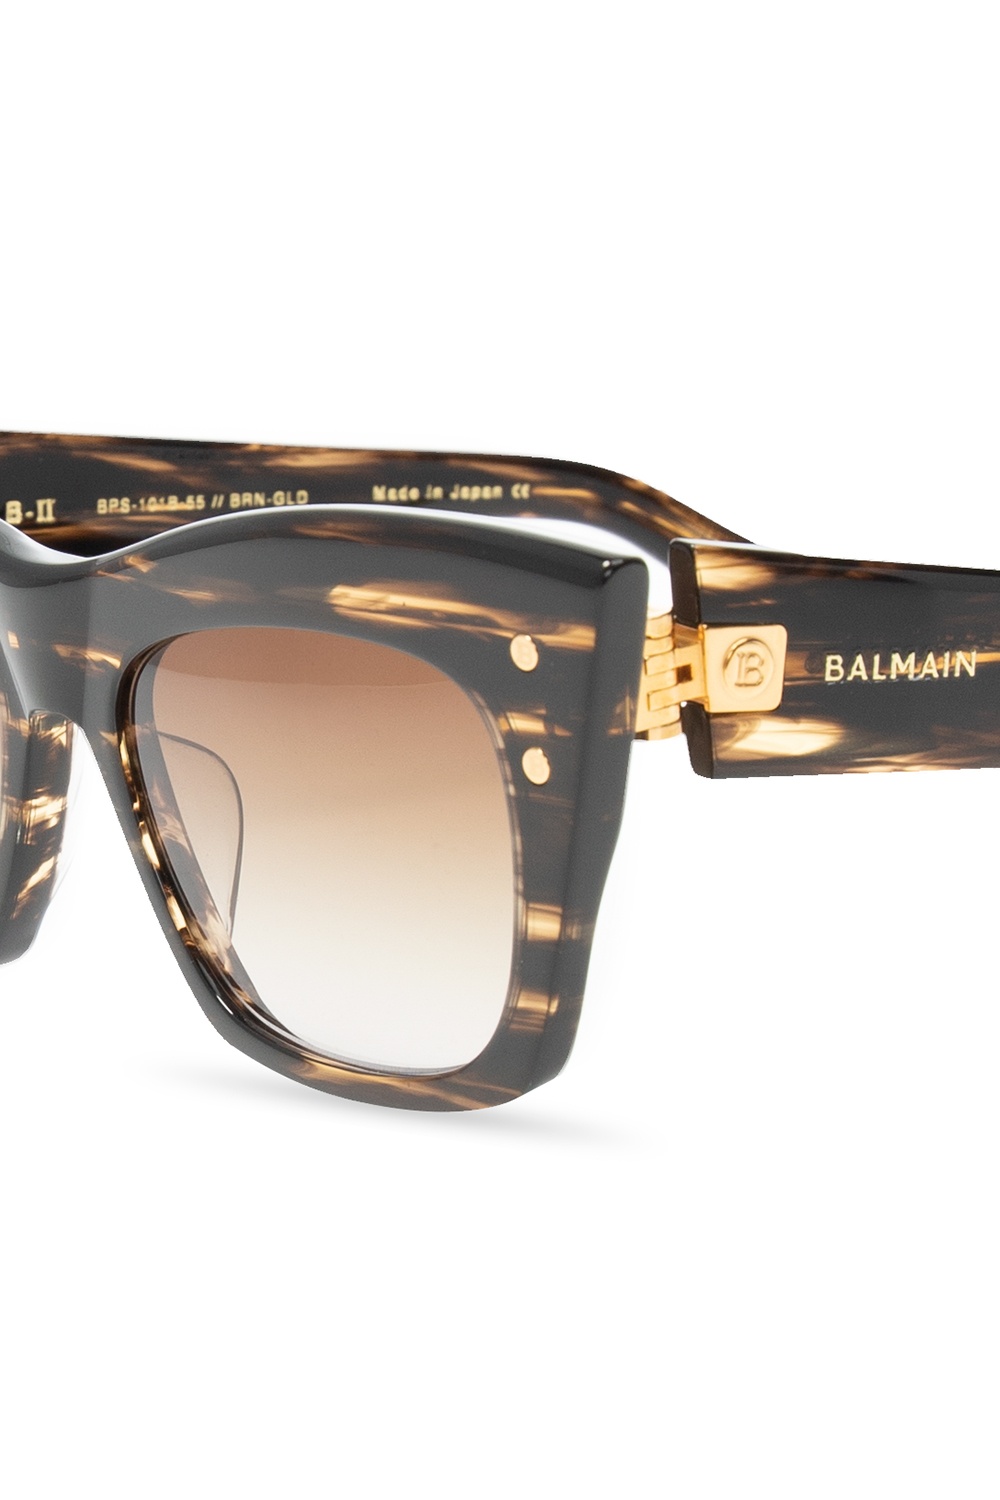 Balmain SL 51 square sunglasses